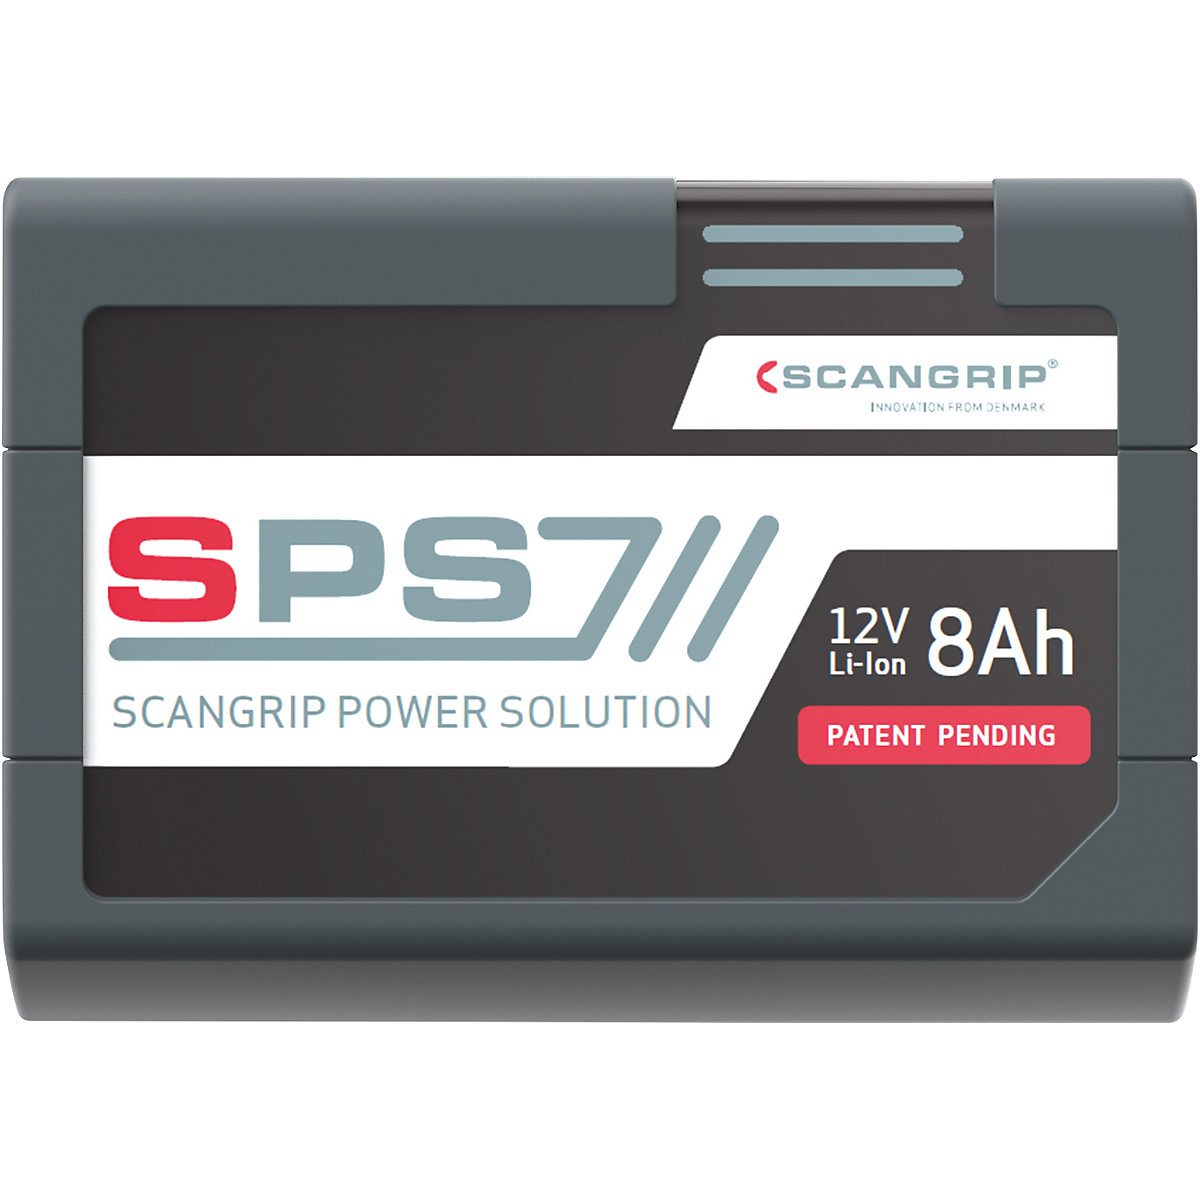 Acumulator de schimb pentru SCANGRIP NOVA SPS – SCANGRIP